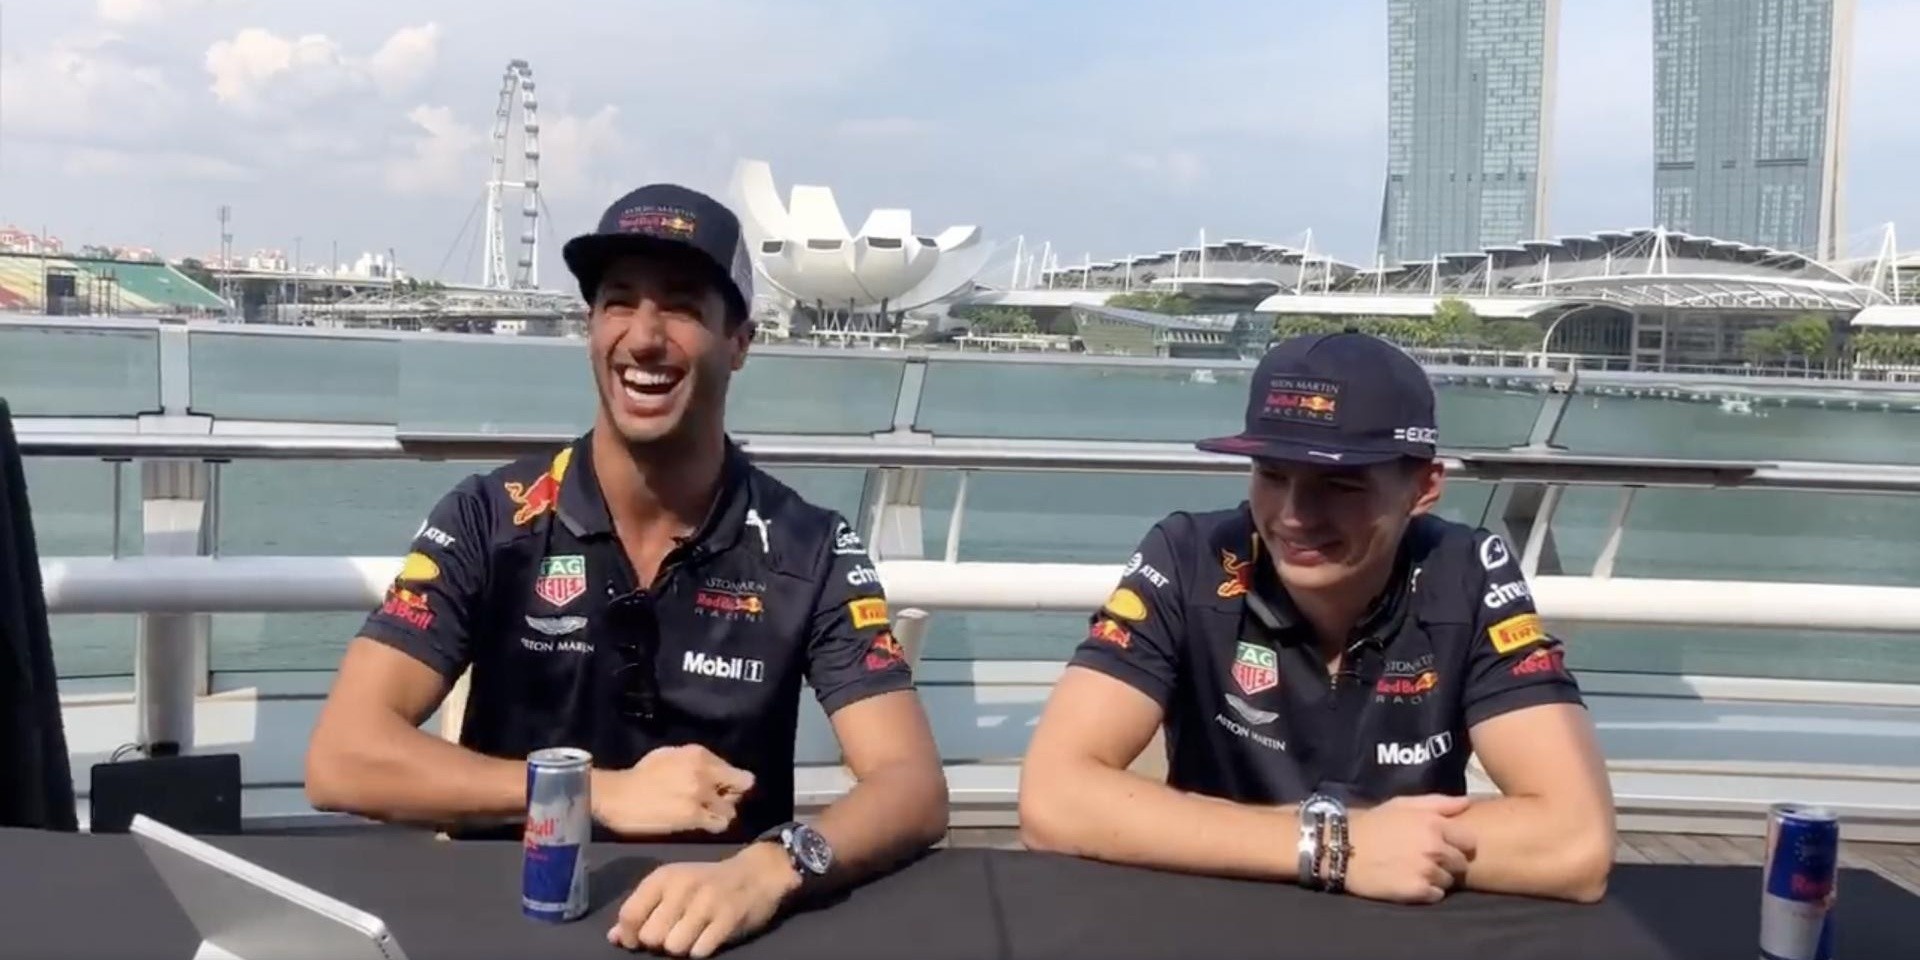 Red Bull drivers react to Singaporean music 